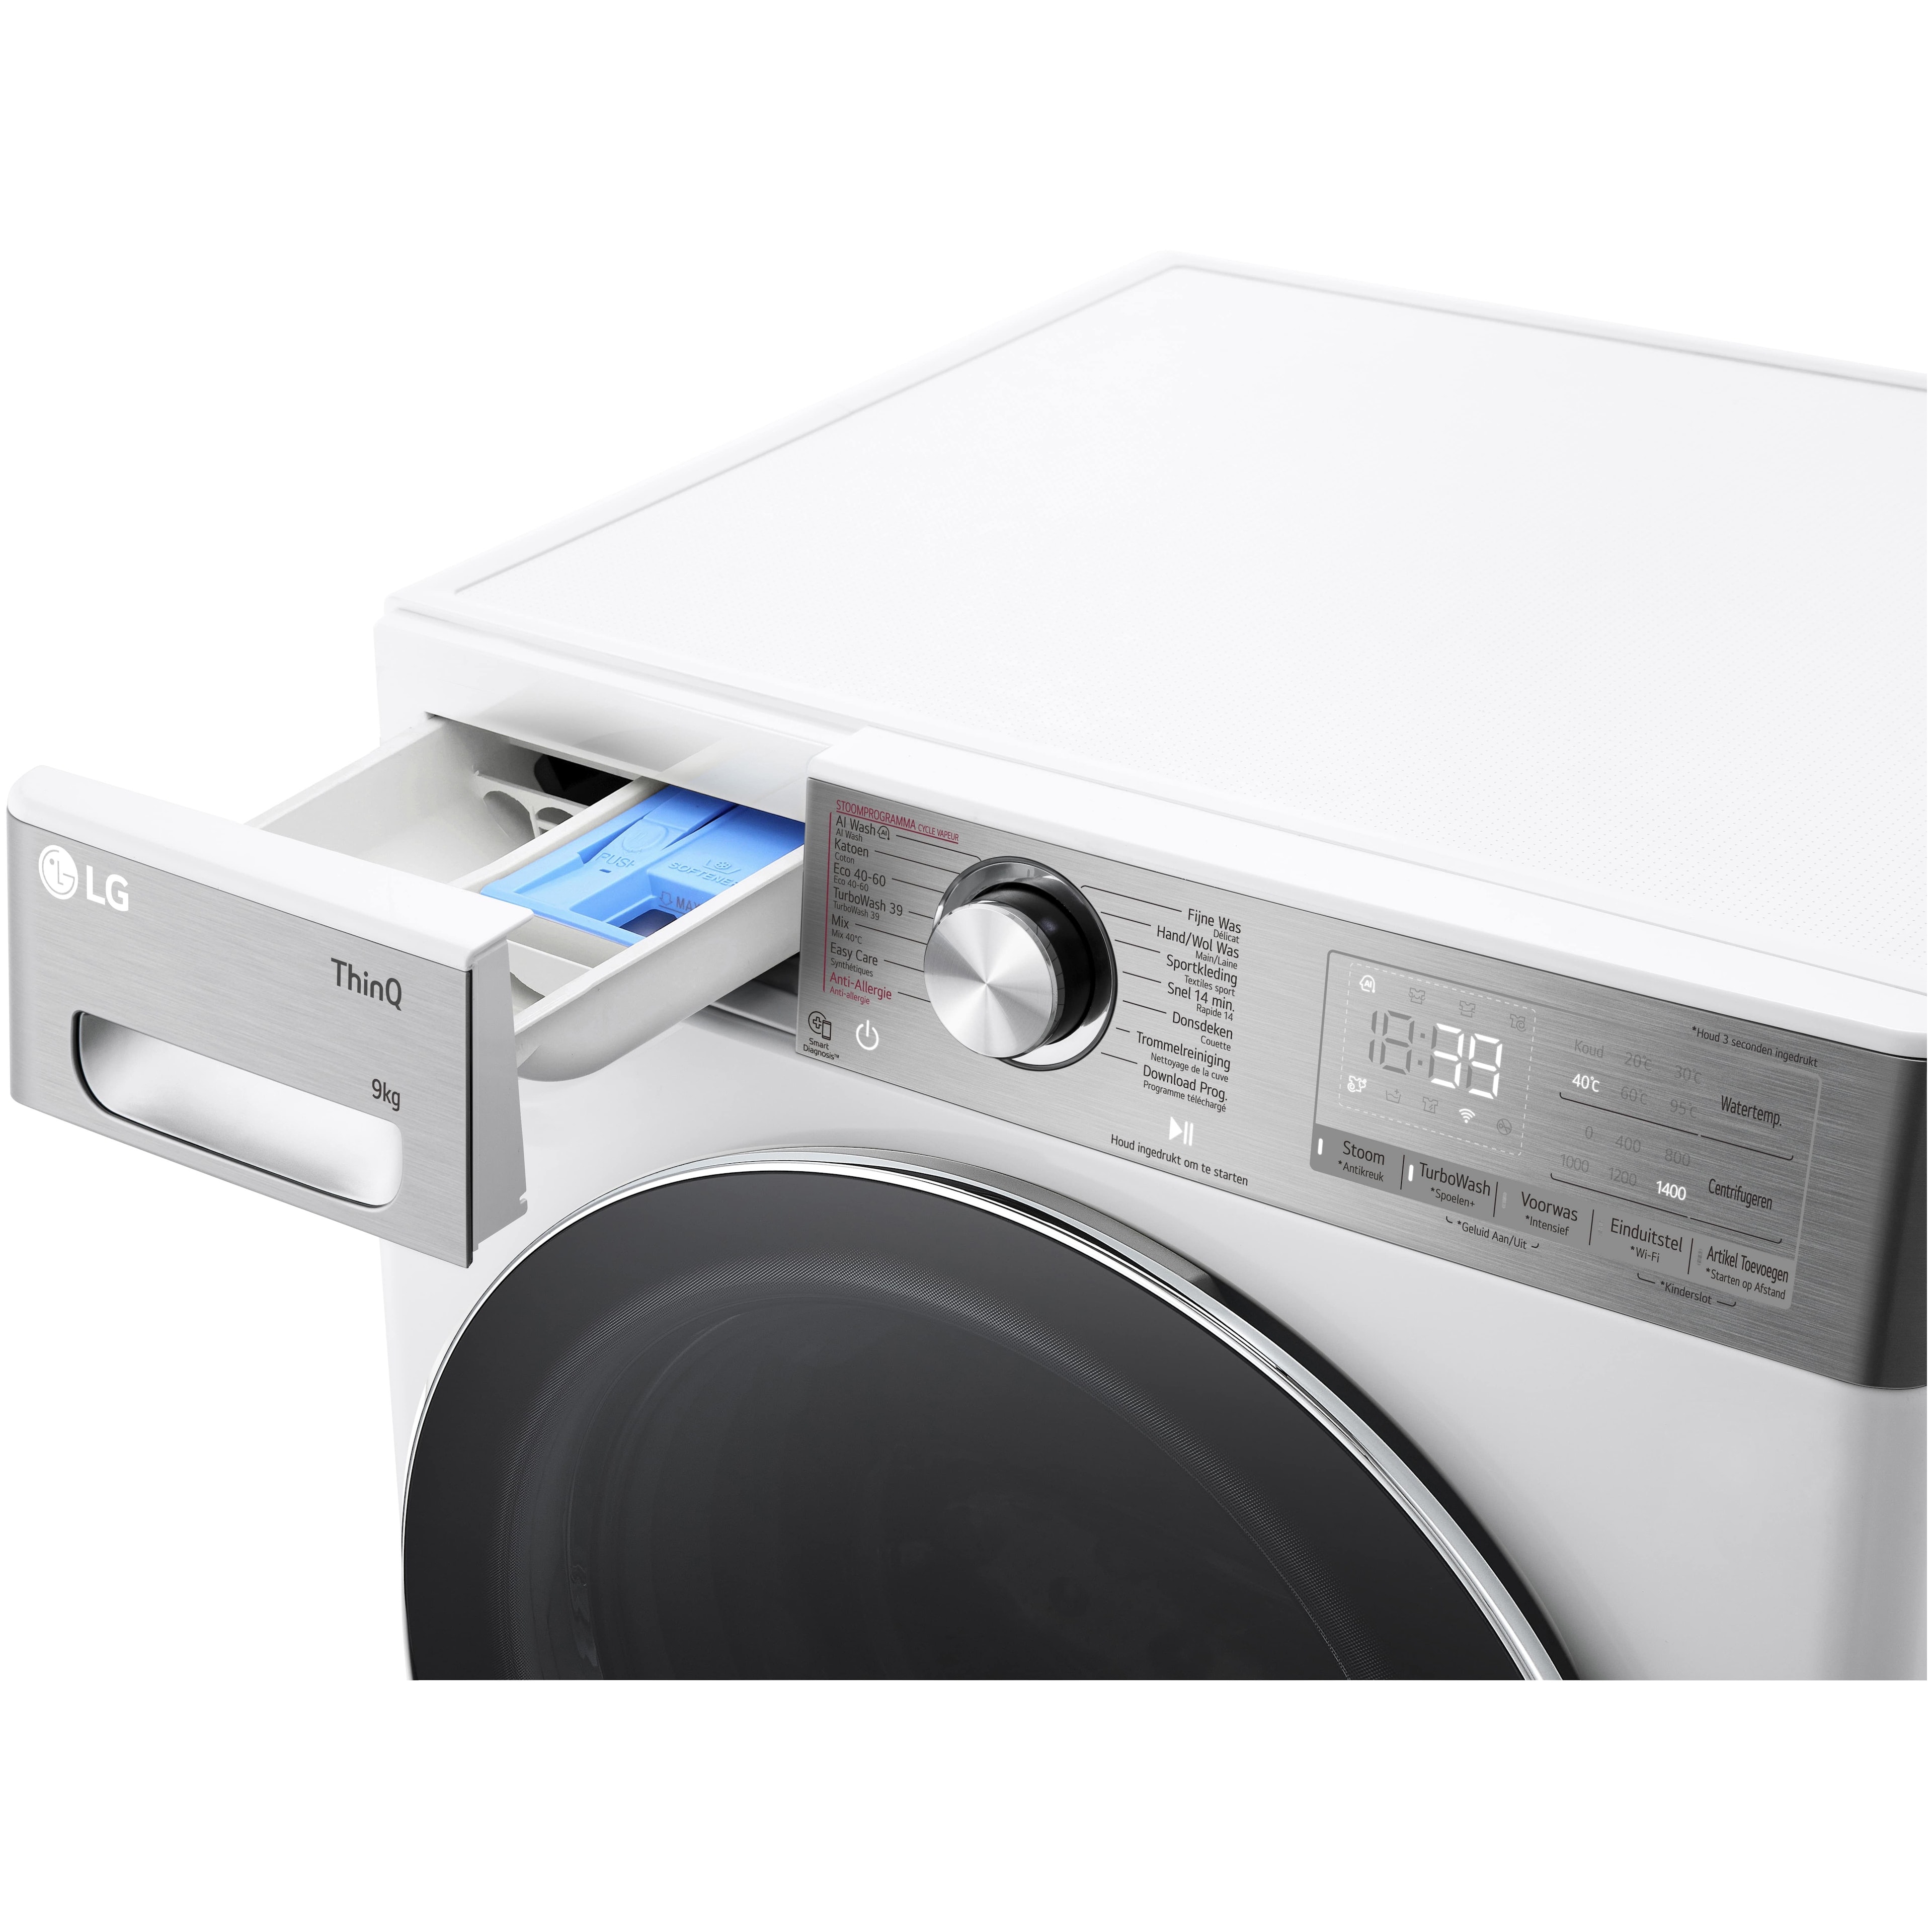 LG wasmachine  F4WR9009S2W afbeelding 4